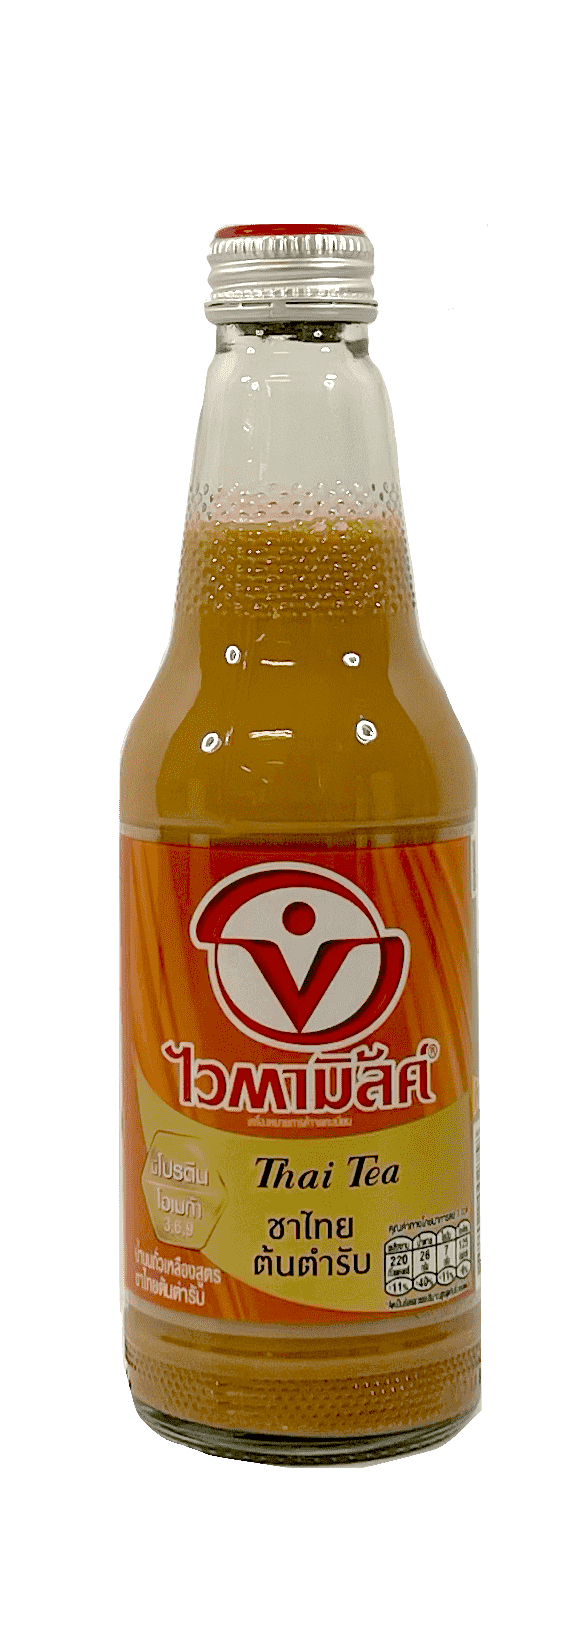 Thai Tea Glass Bottle 300ml Vitamilk Thailand